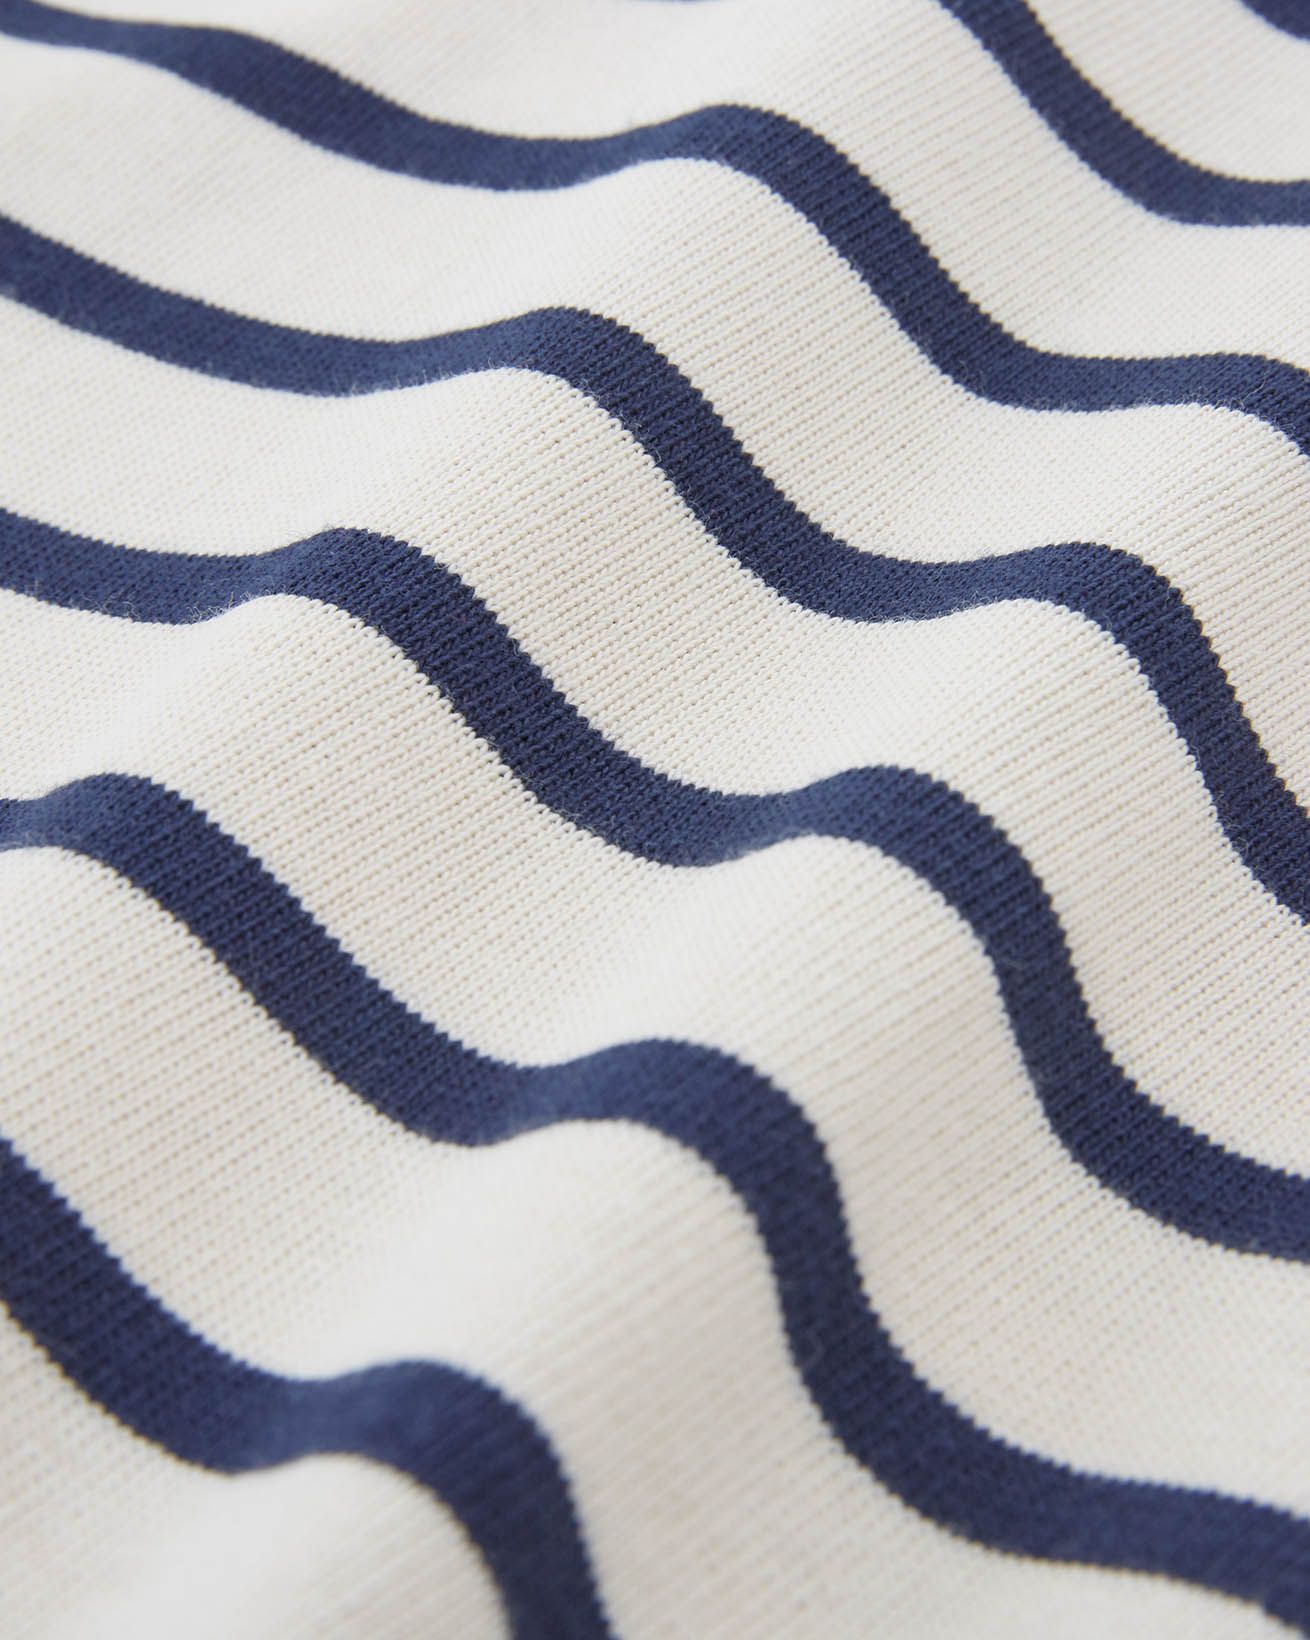 8426_organic-cotton-jersey-hoodie_oatmeal-navy-stripe_detail-1_web.jpg